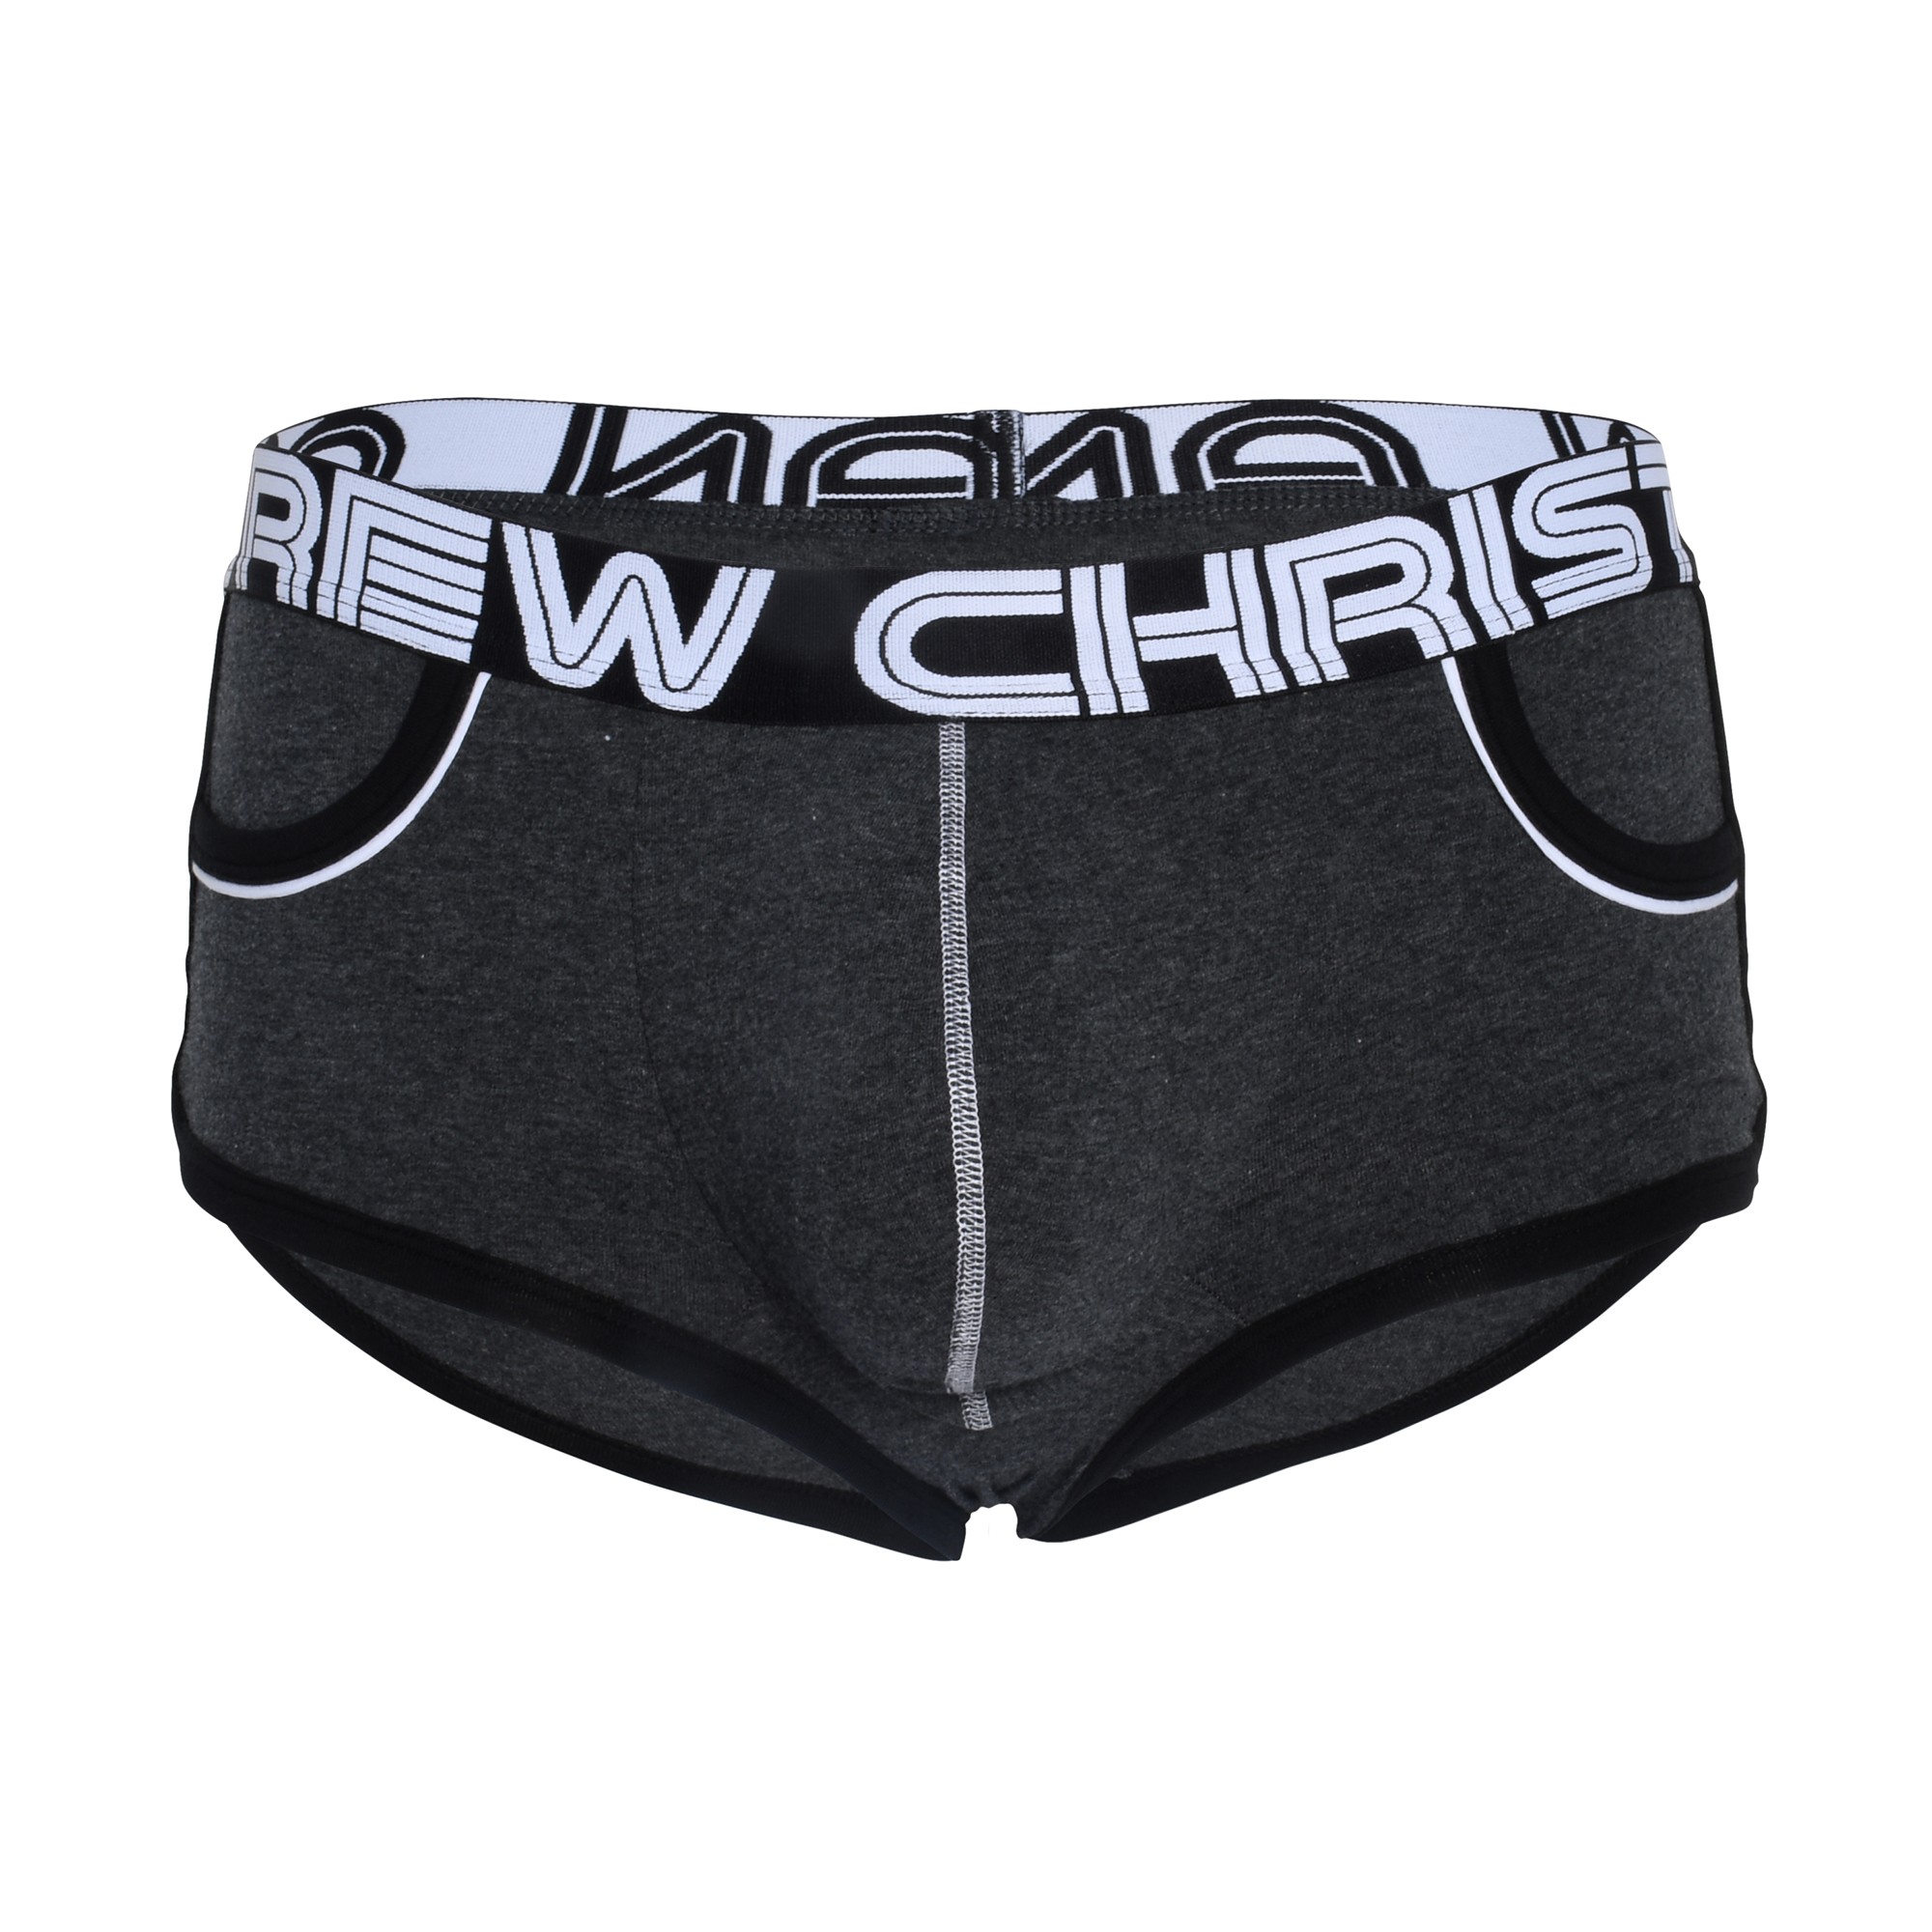 Underwear Suggestion: Andrew Christian - Show-It Retro Pop Boxer